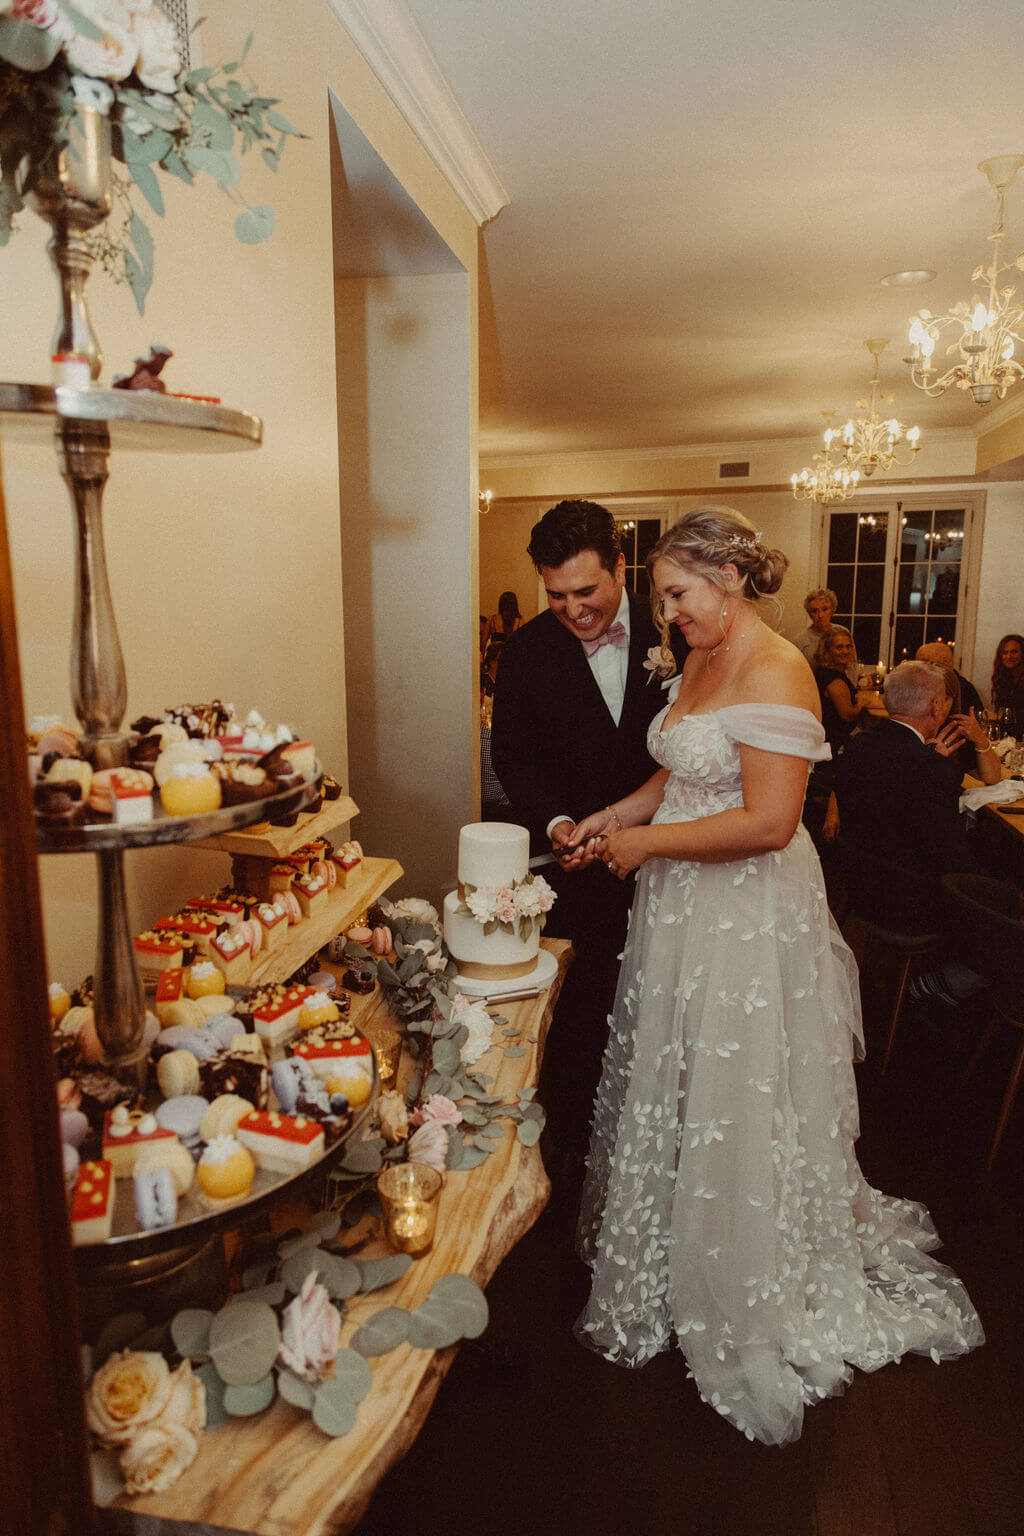 Bride and groom cutting white wedding cake at The Wild Tart